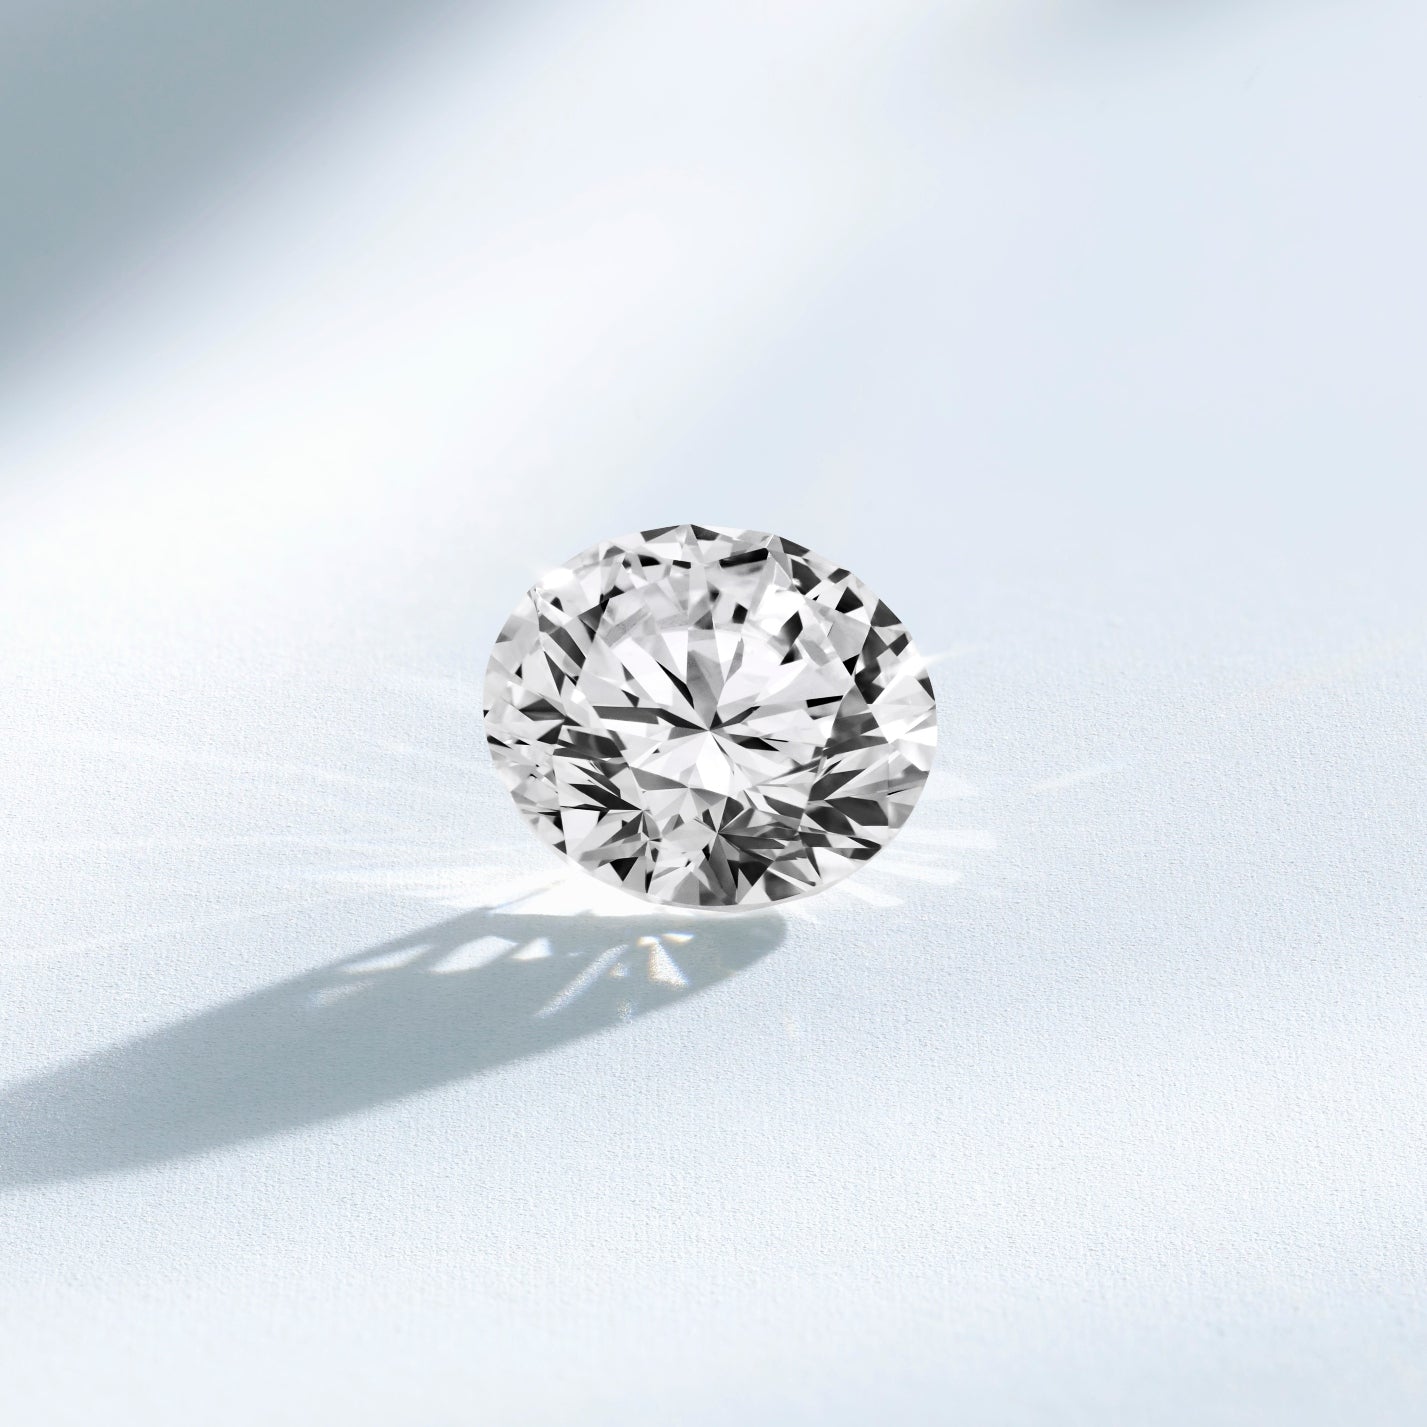 Loose white round brilliant lab-grown diamond